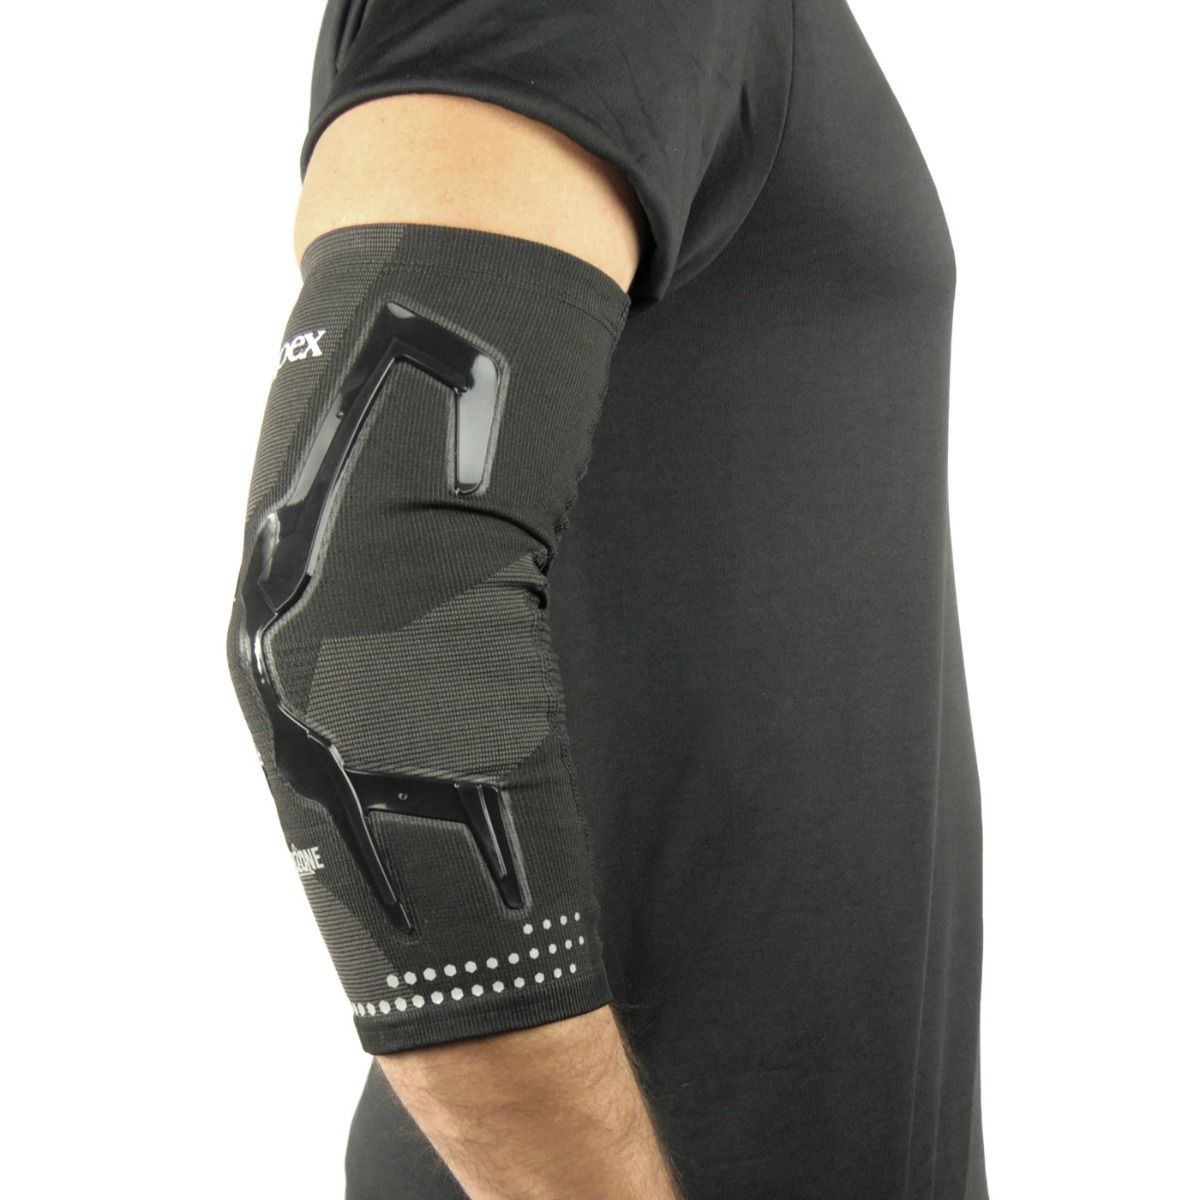 GRAD COMP ARM SLEEVE PERF BLK PR XS, Elbow Braces & Supports